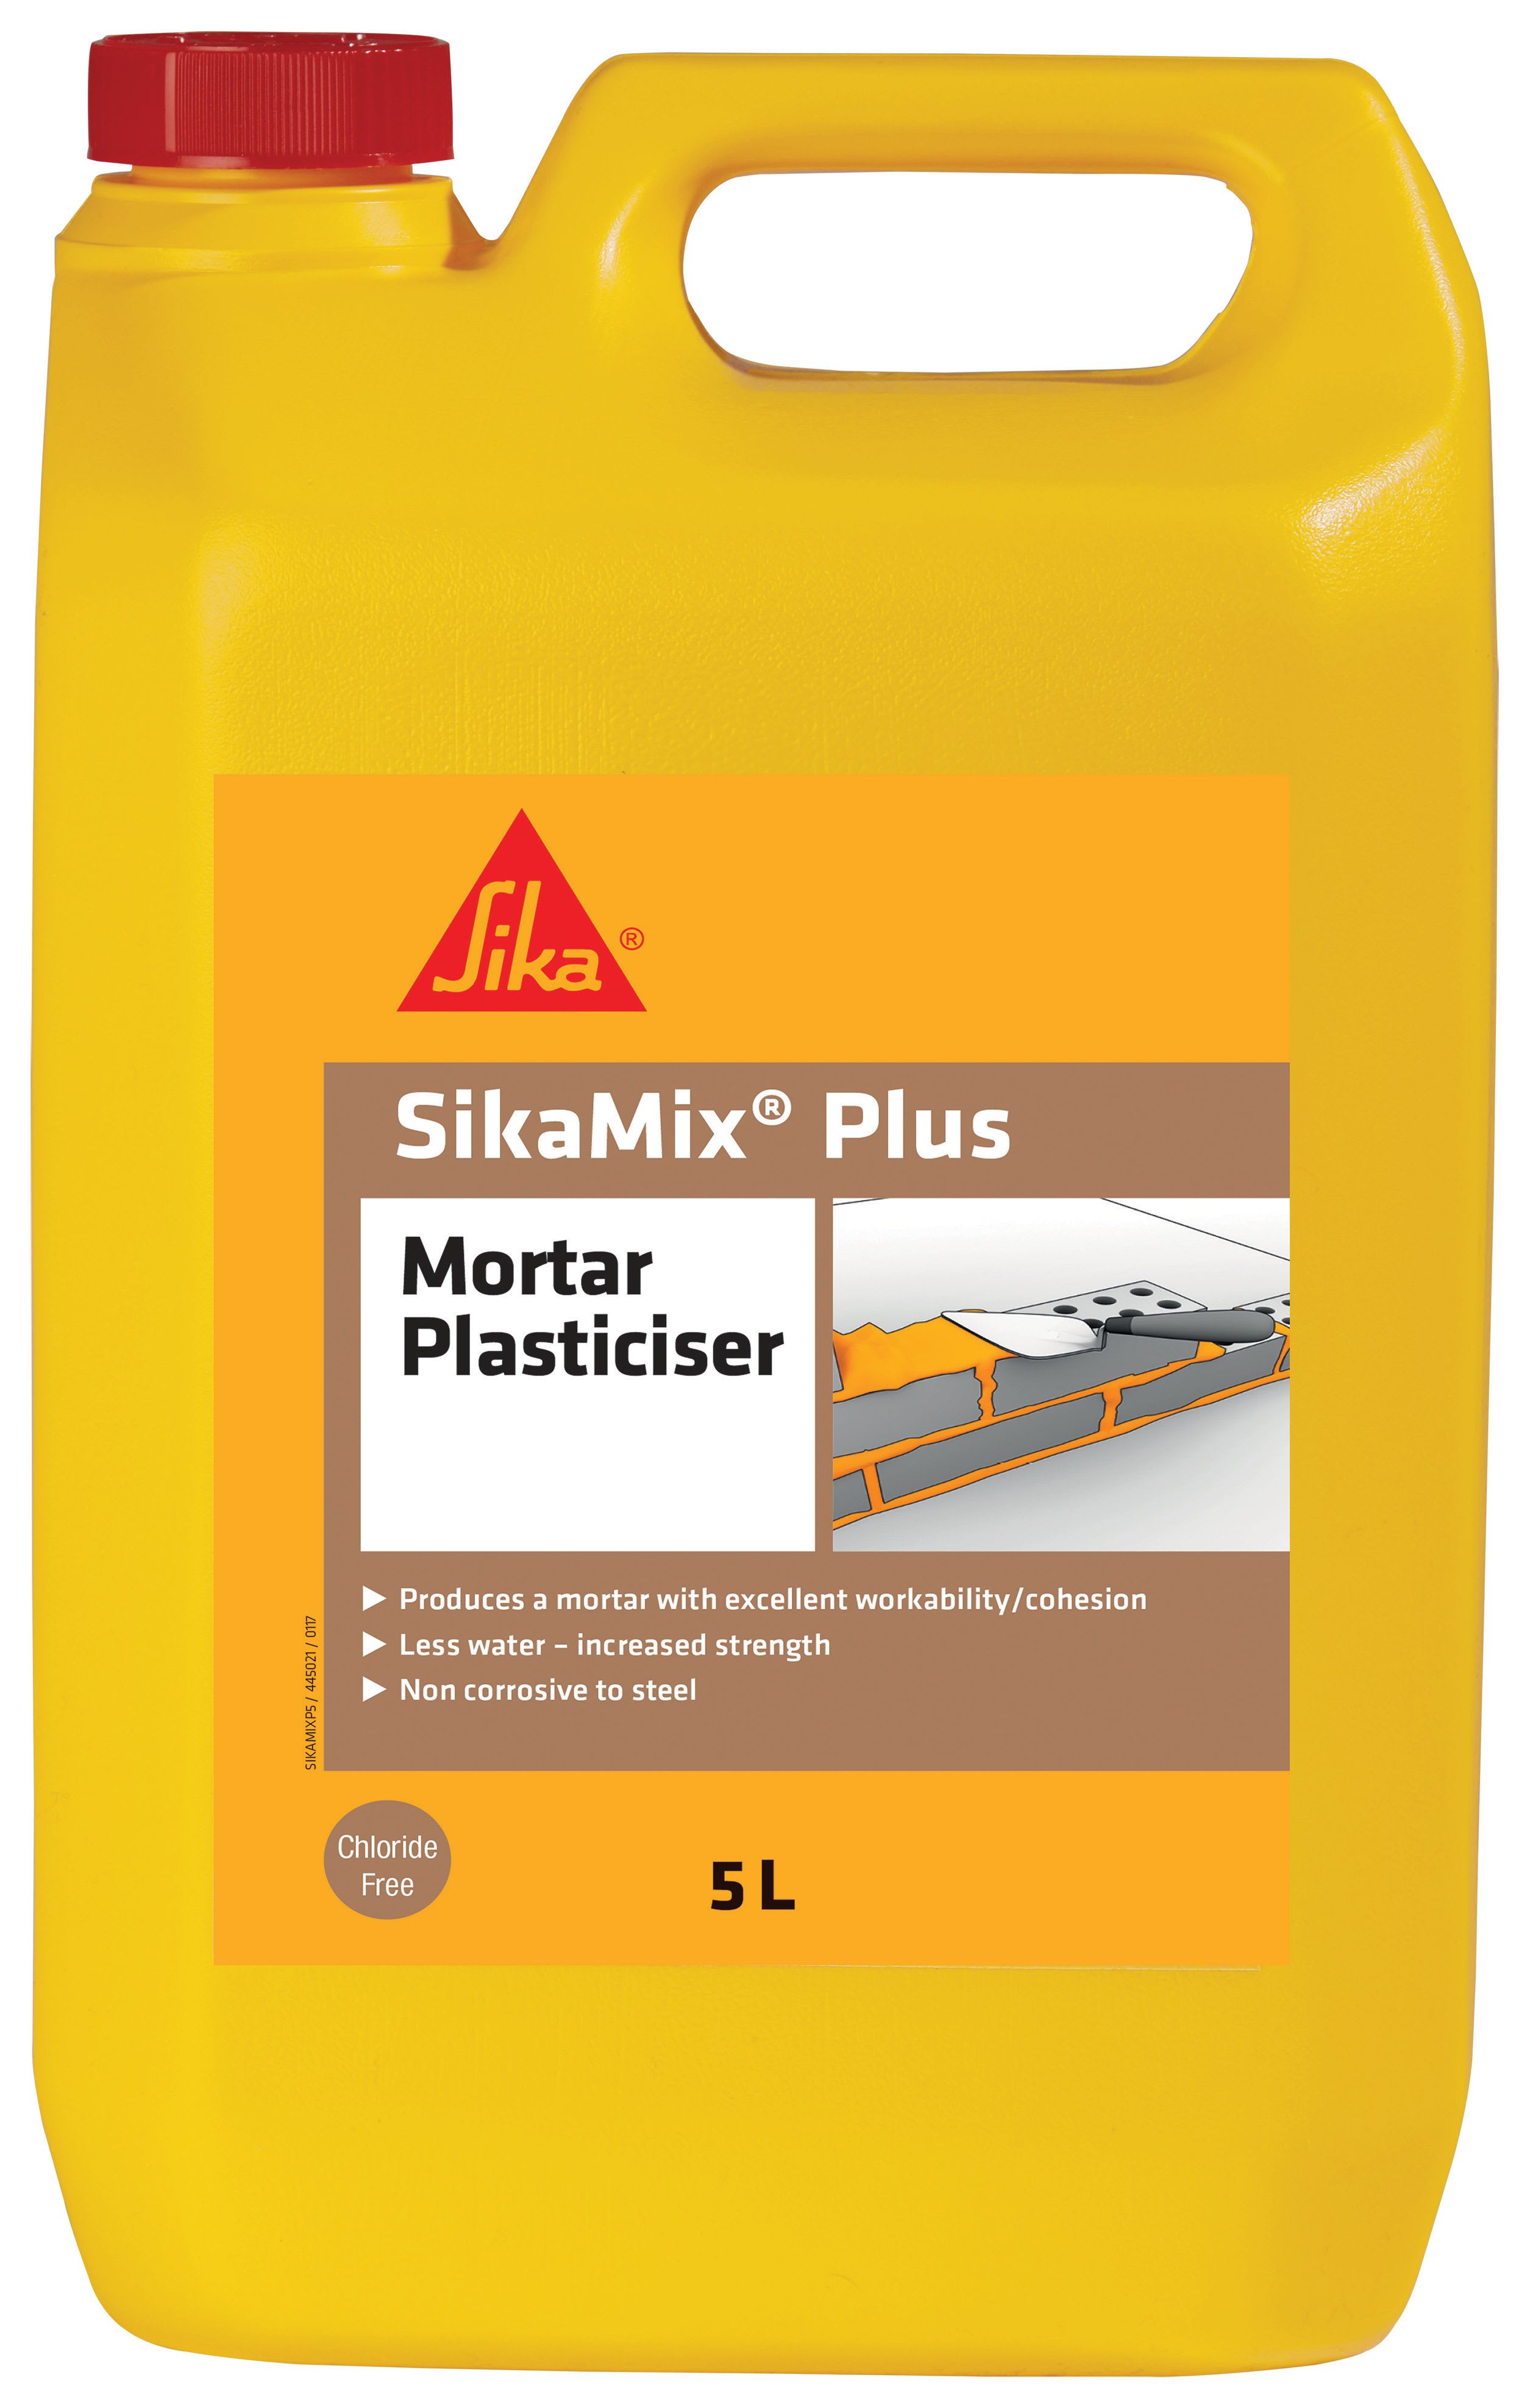 Sika Mix Plus Mortar Plasticiser Admixture - 5L